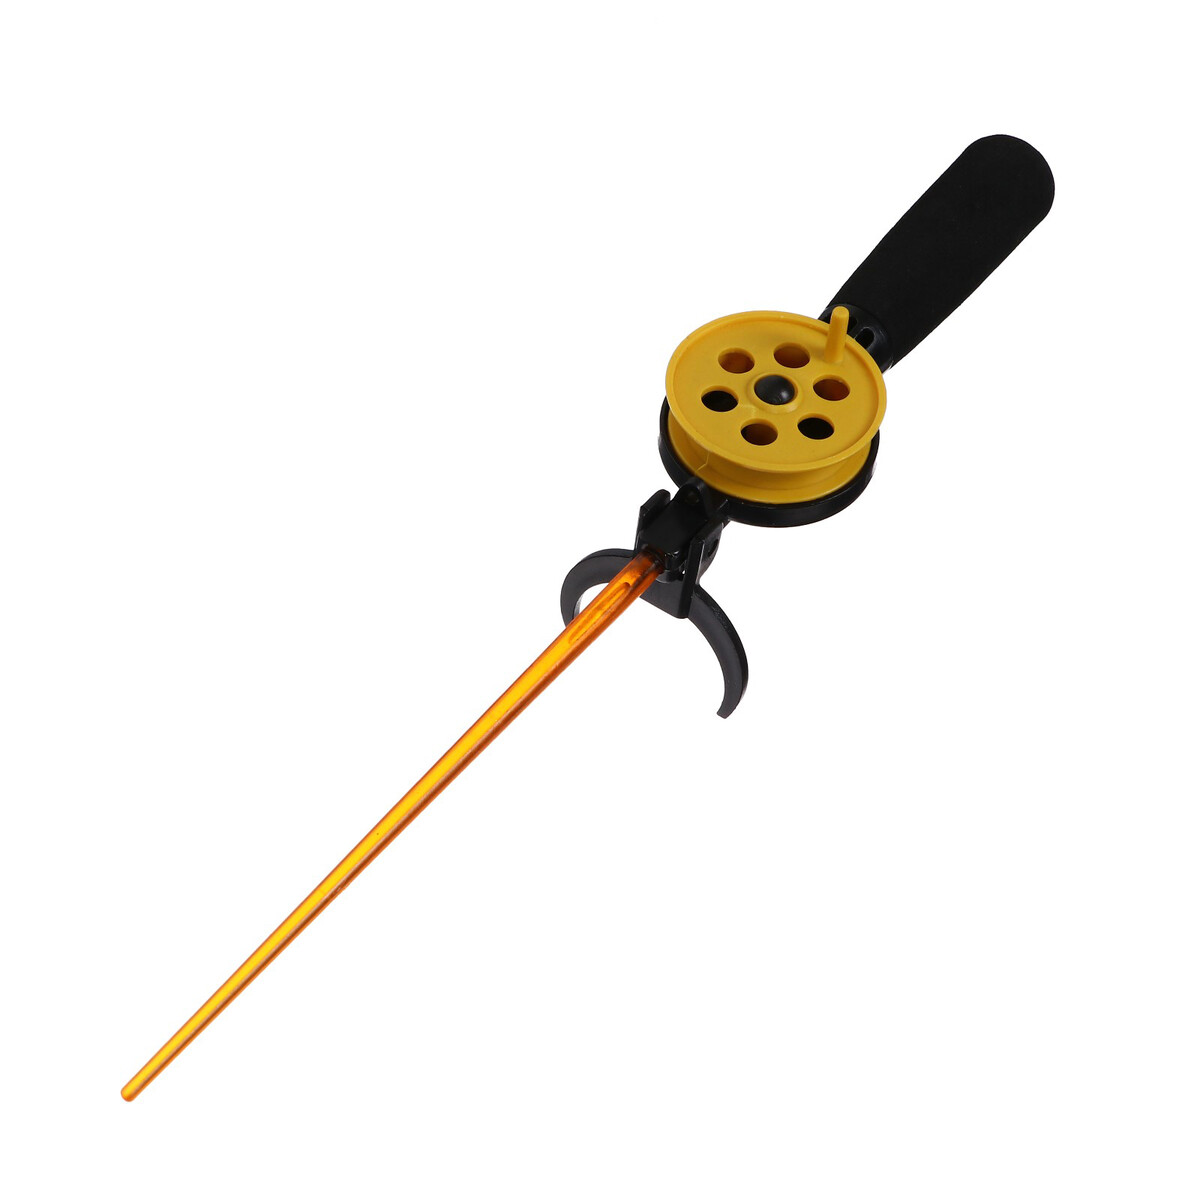 Удочка зимняя, ручка неопрен, hfb-9 удочка зимняя балалайка желтый hfb 43